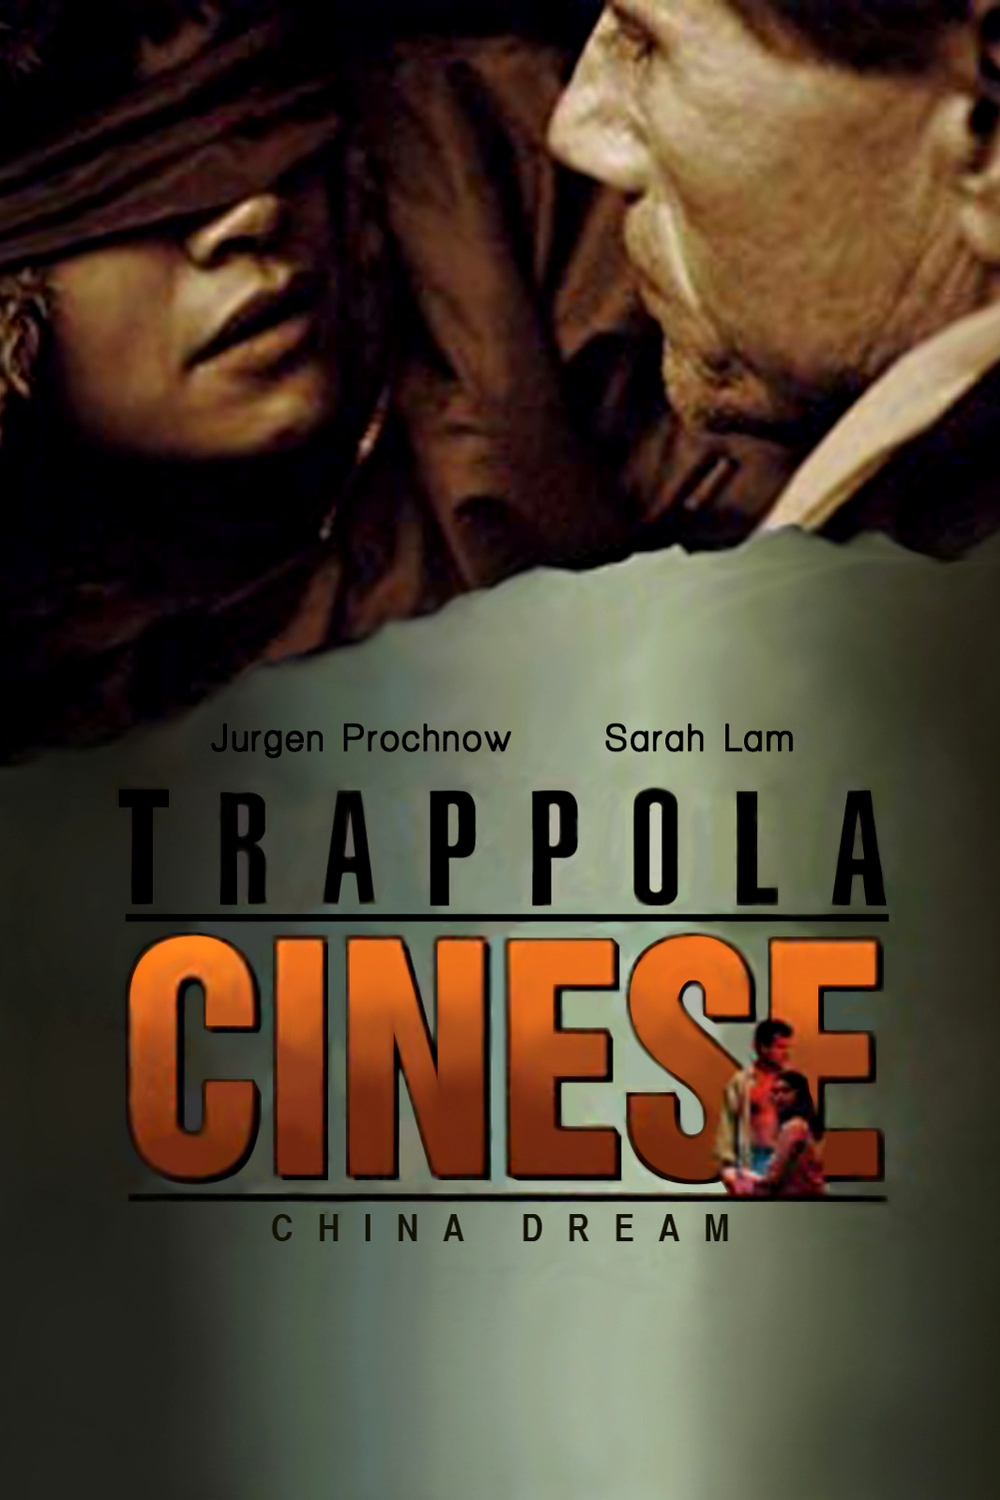 Trappola cinese (1998)